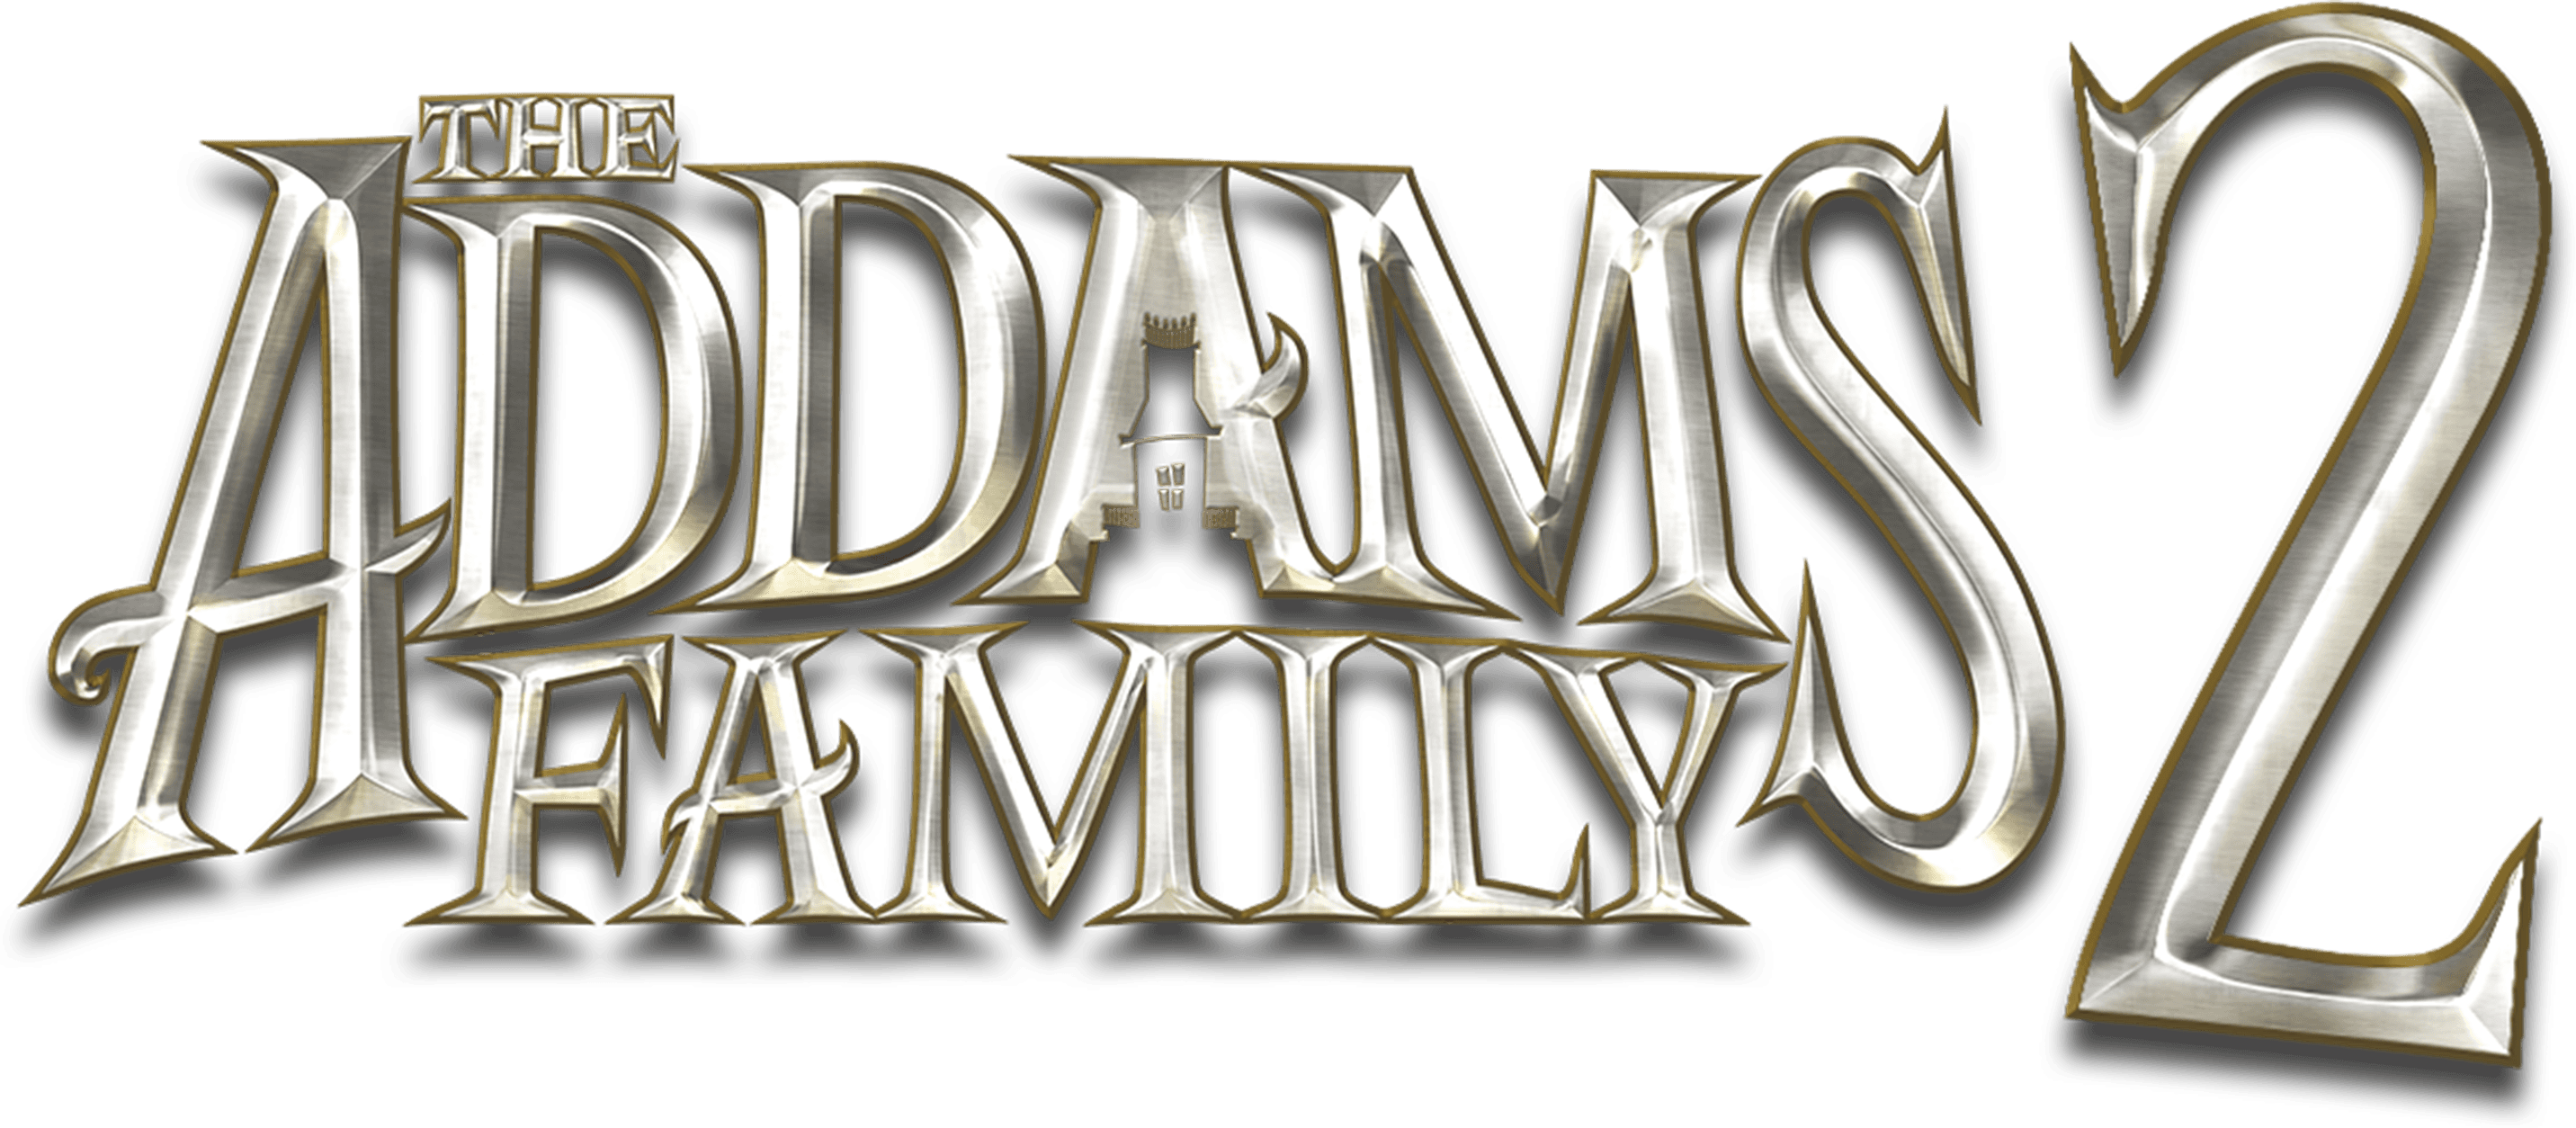 The Addams Family 2 logo